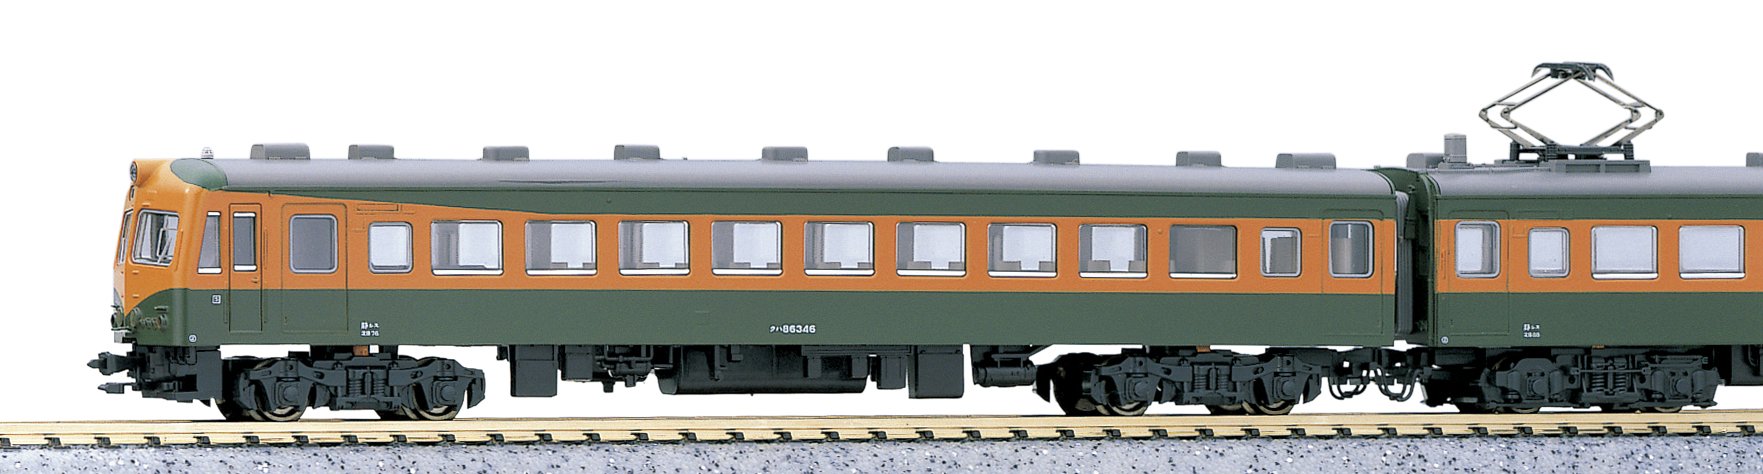 Kato N Gauge 4348-1 Kuha86 300 Model Train Set